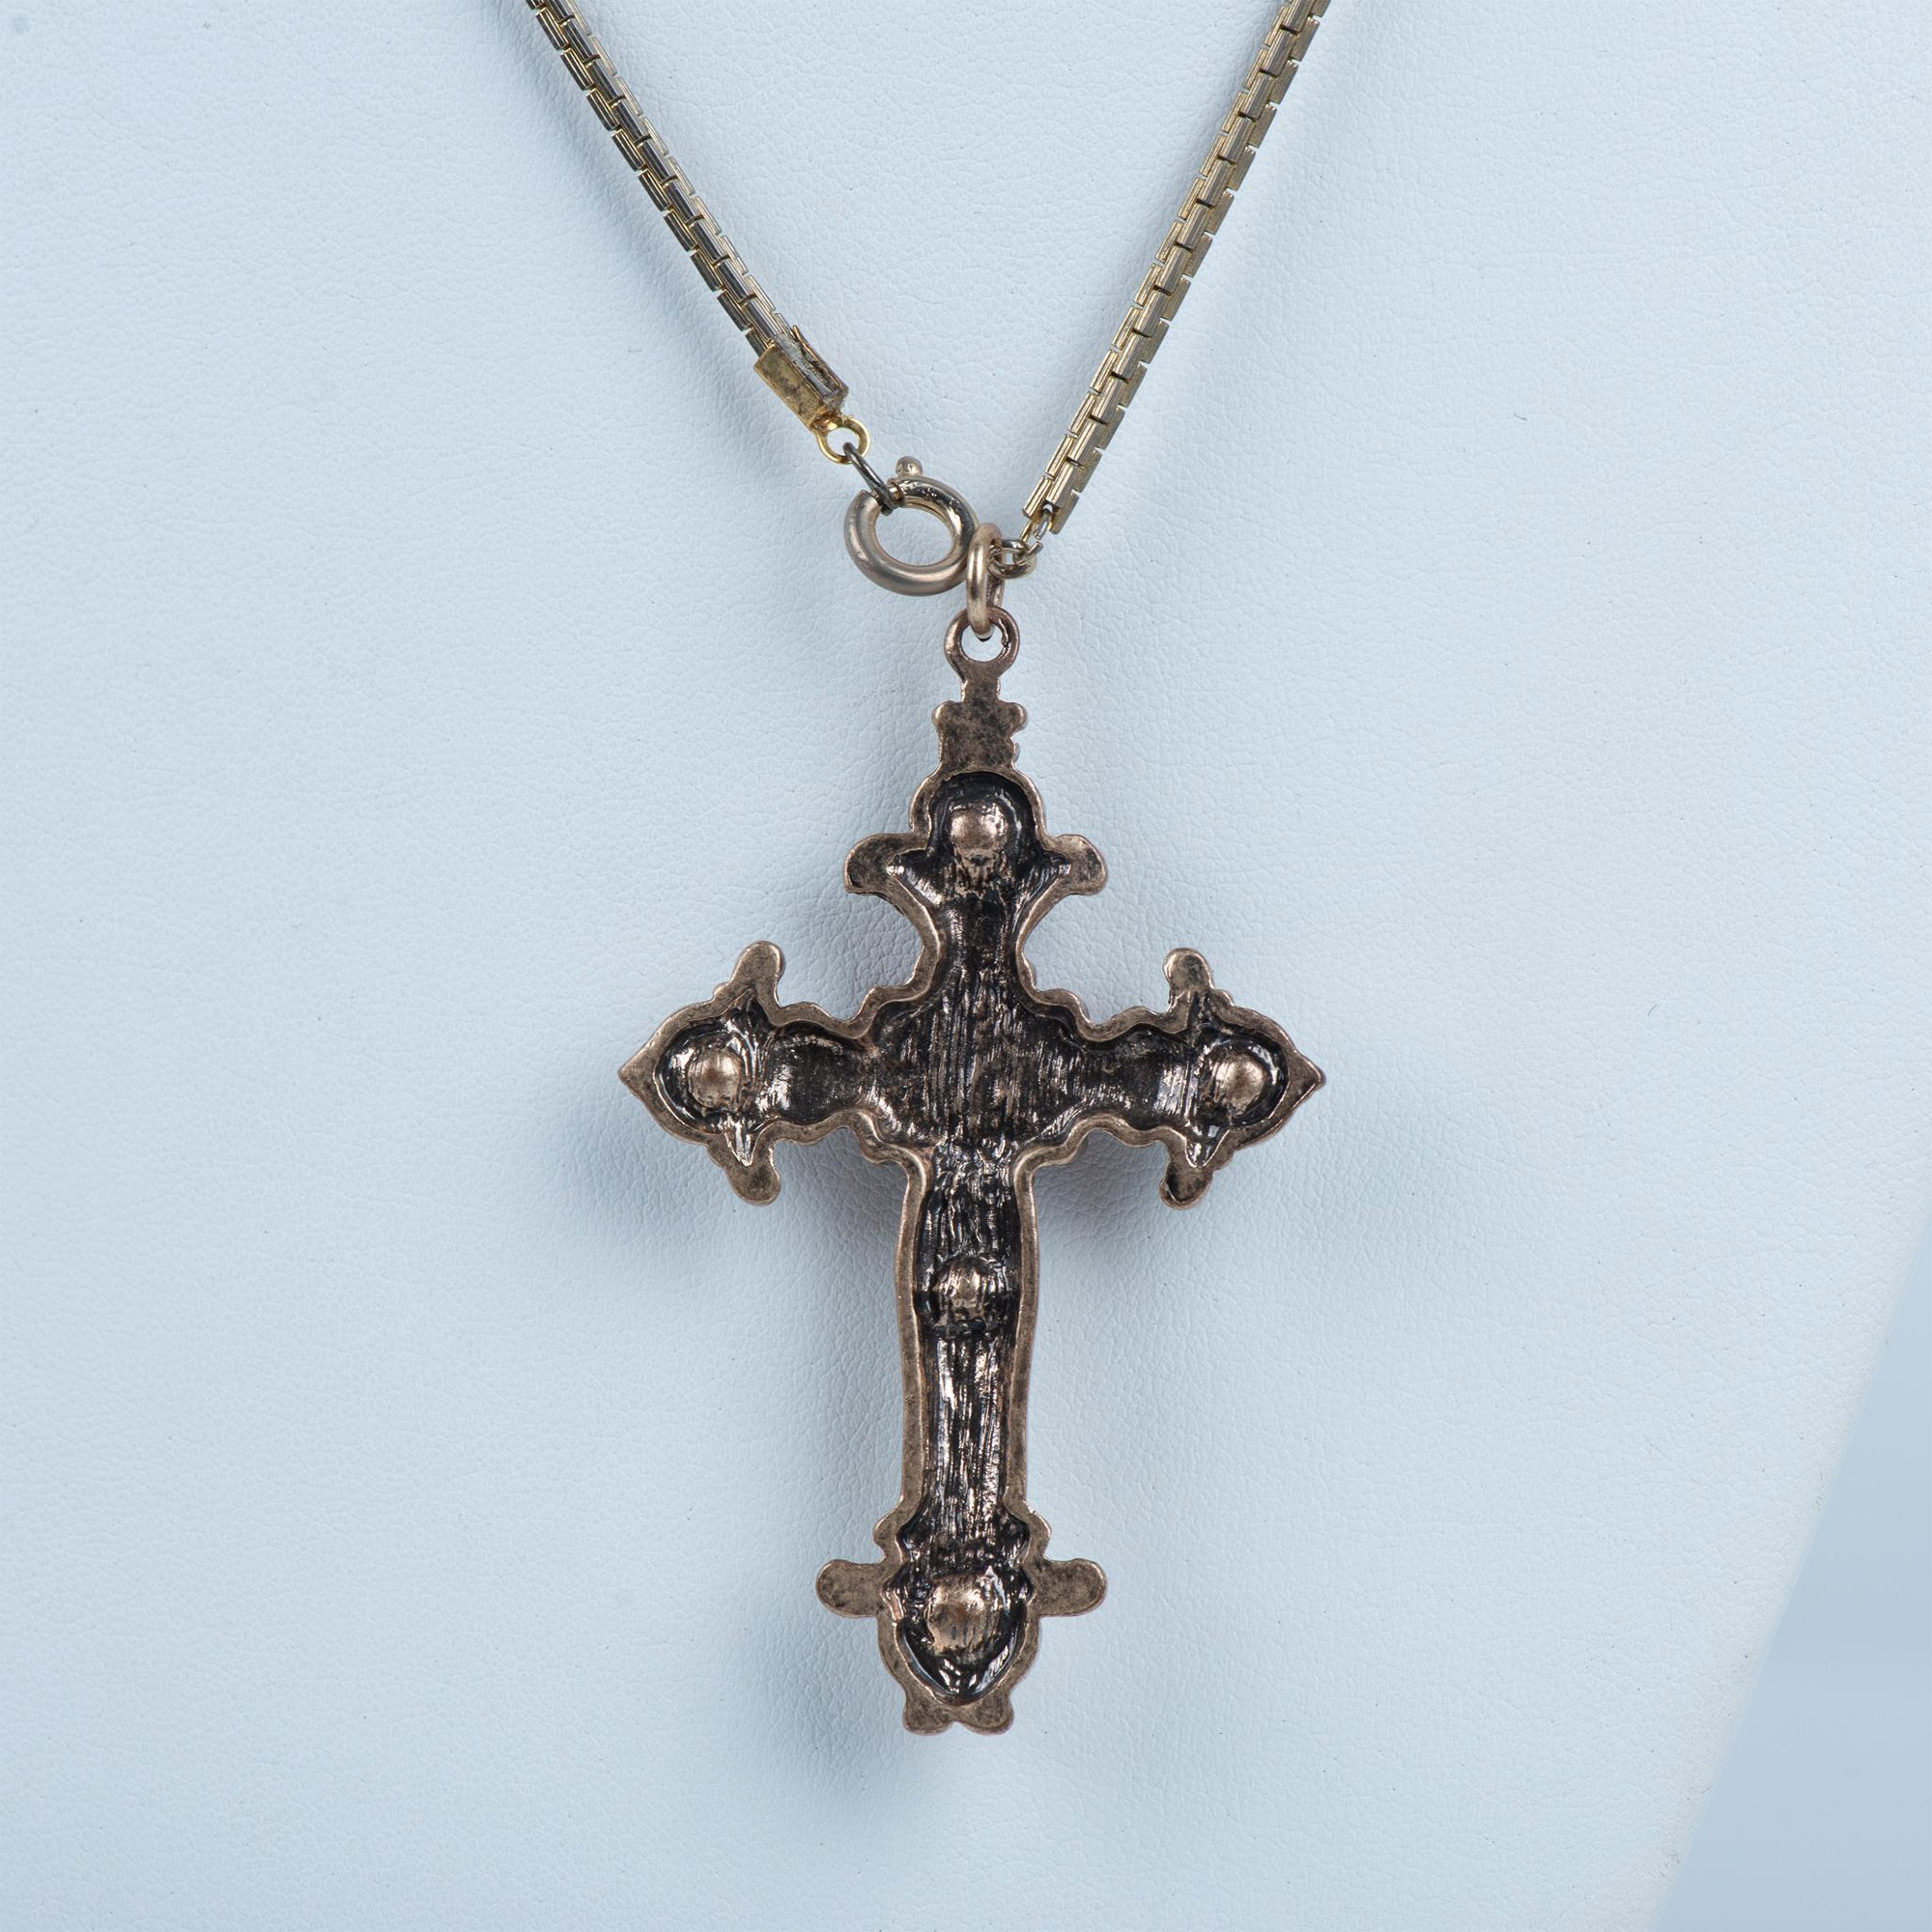 Art Nouveau Embellished Cross Pendant Necklace - Image 4 of 4